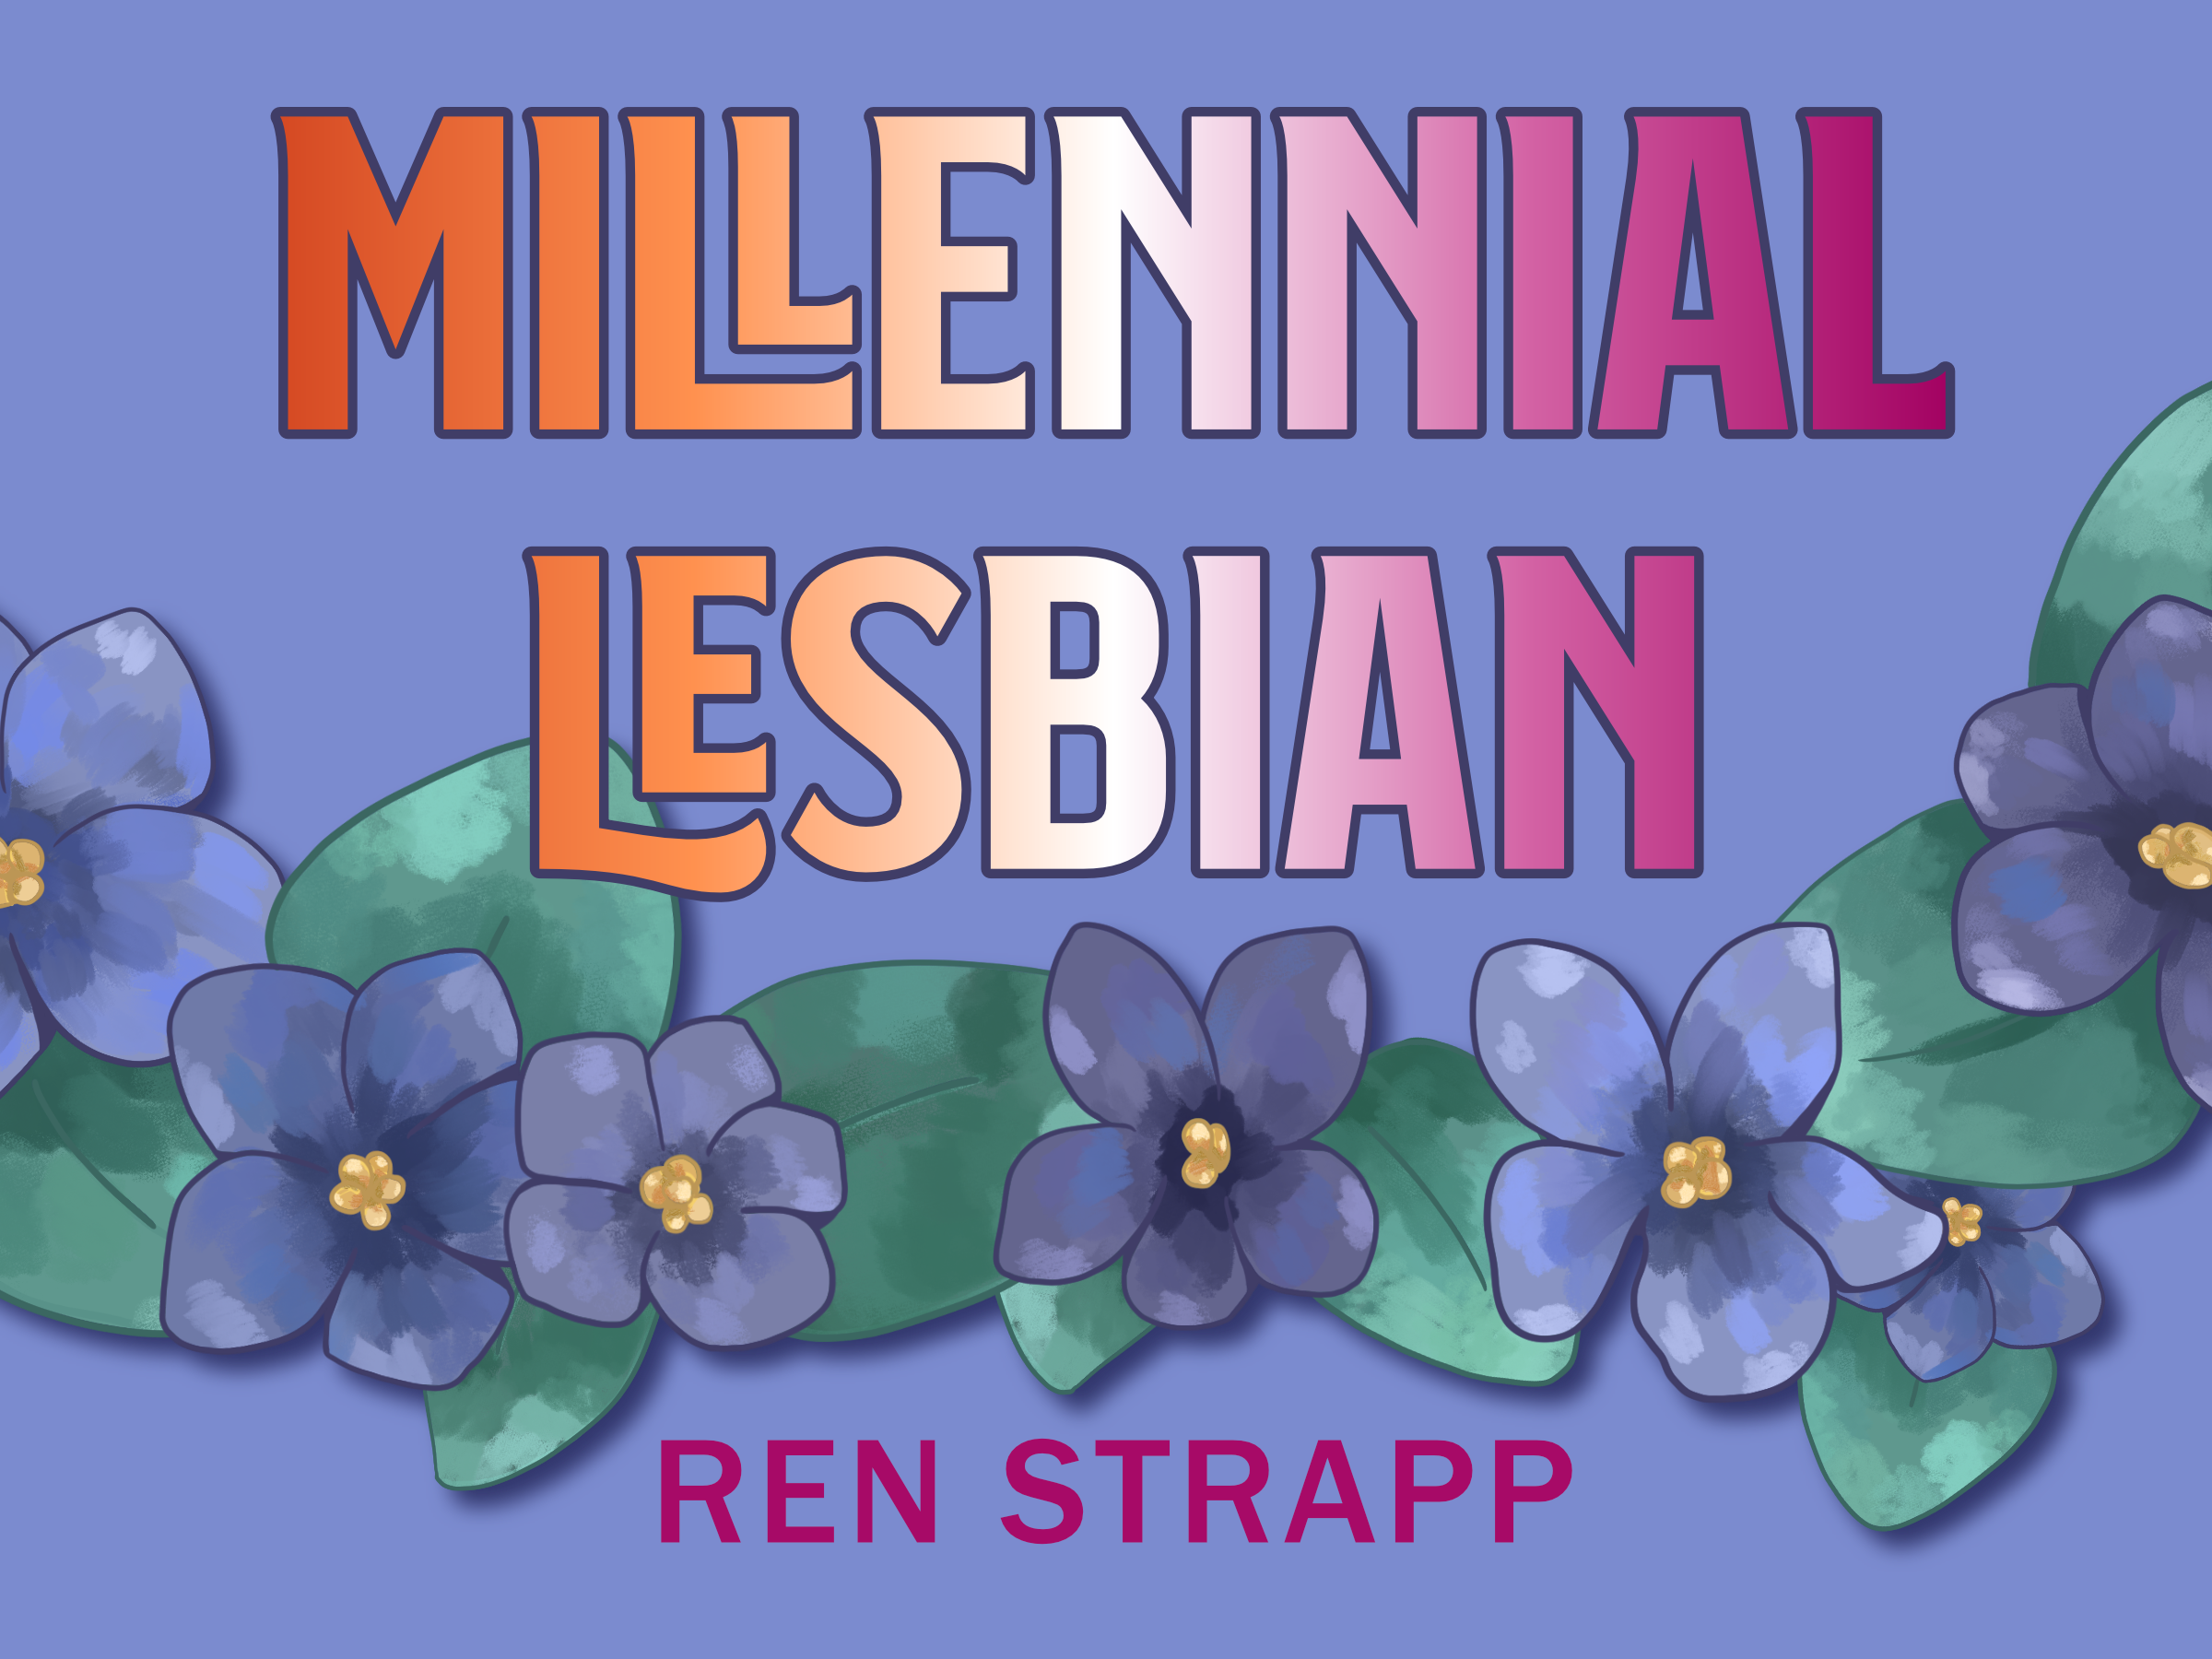 Millenial Lesbian